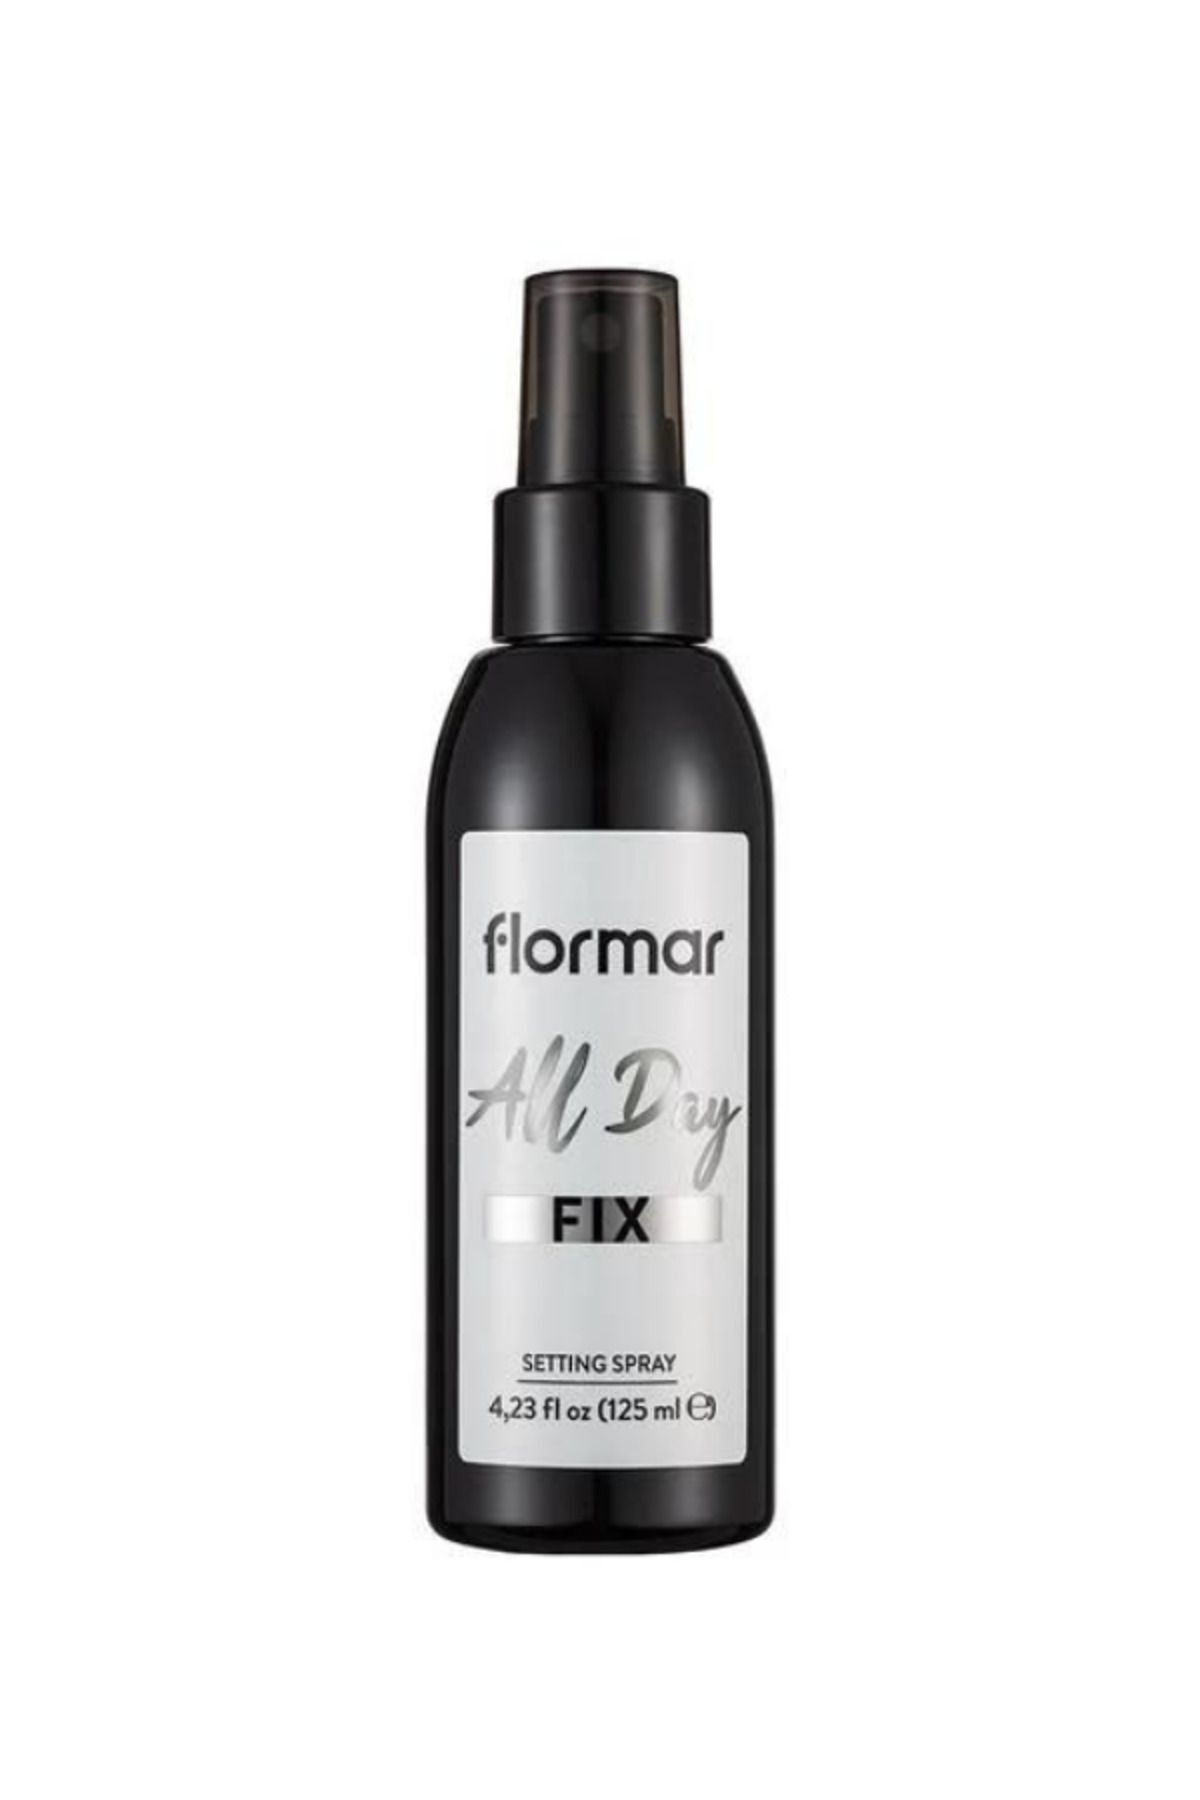 Flormar All Day Fix Skin Brightening Matte Finish Makeup Fixing Spray 000 pssn2455